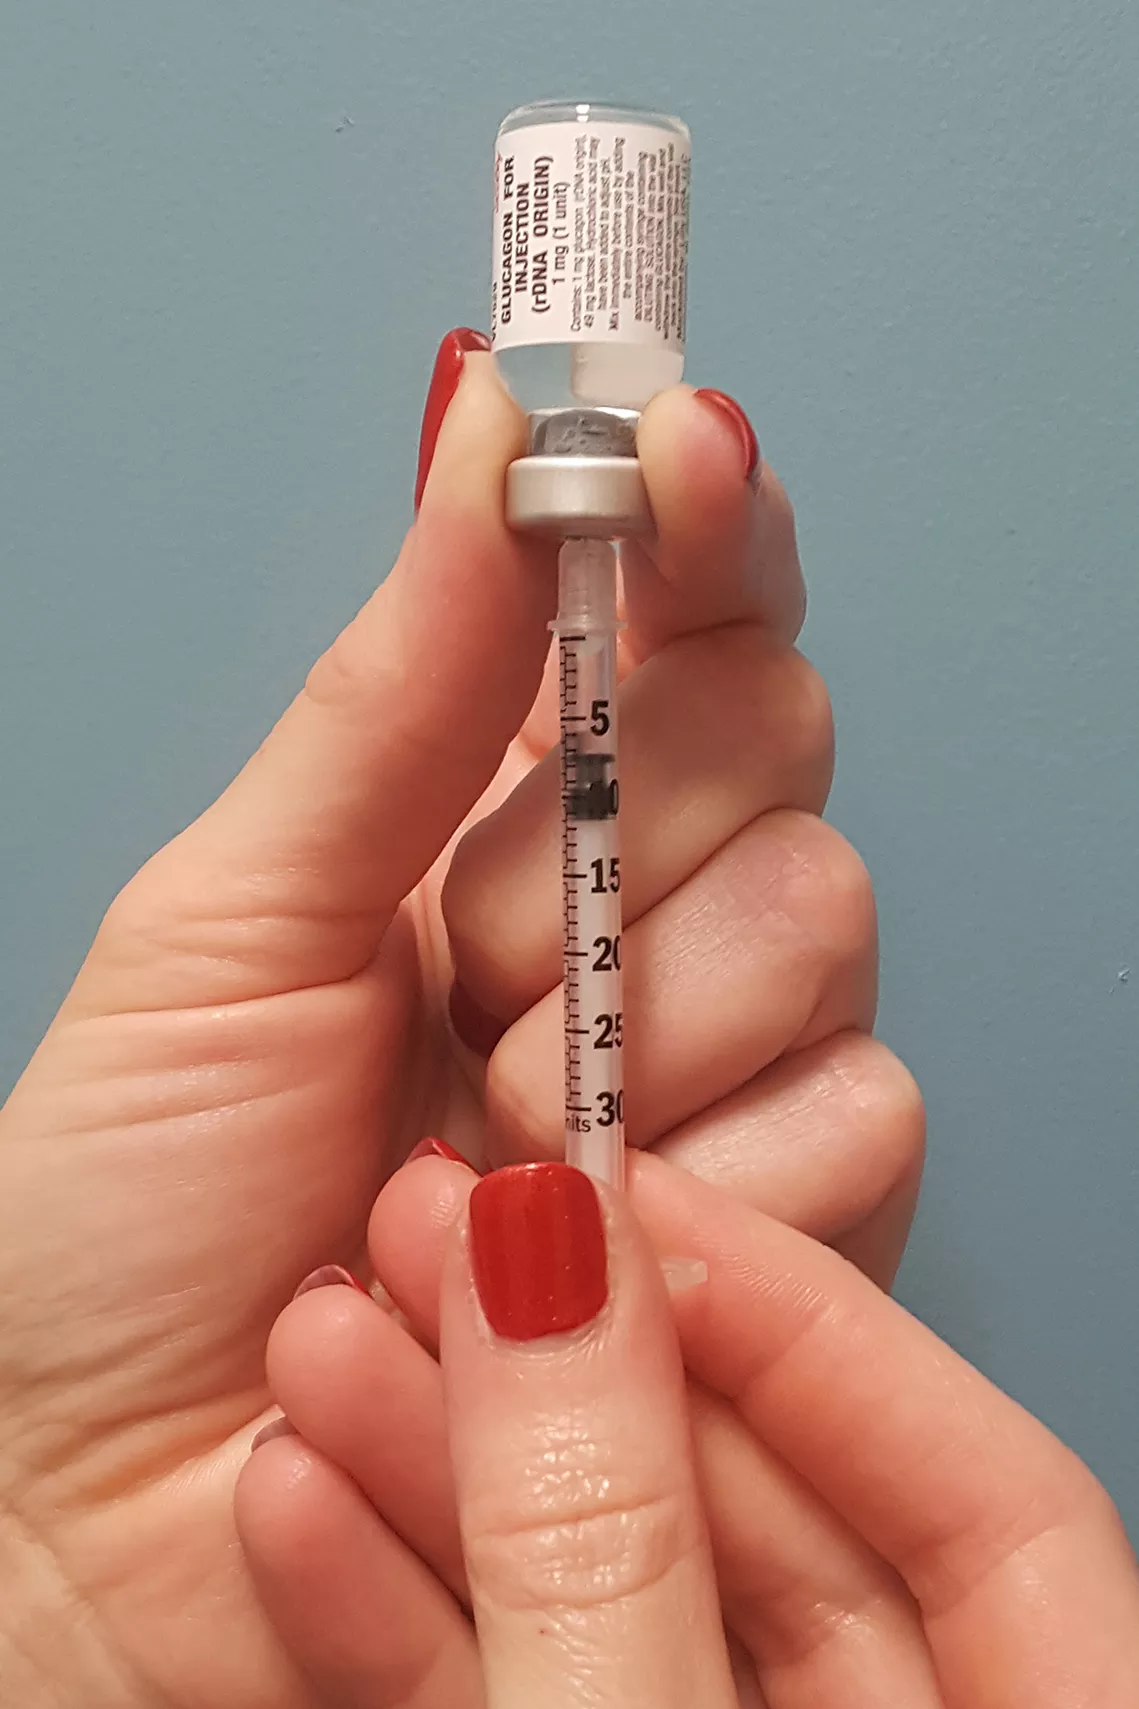 glucagon with insulin syringe, photo